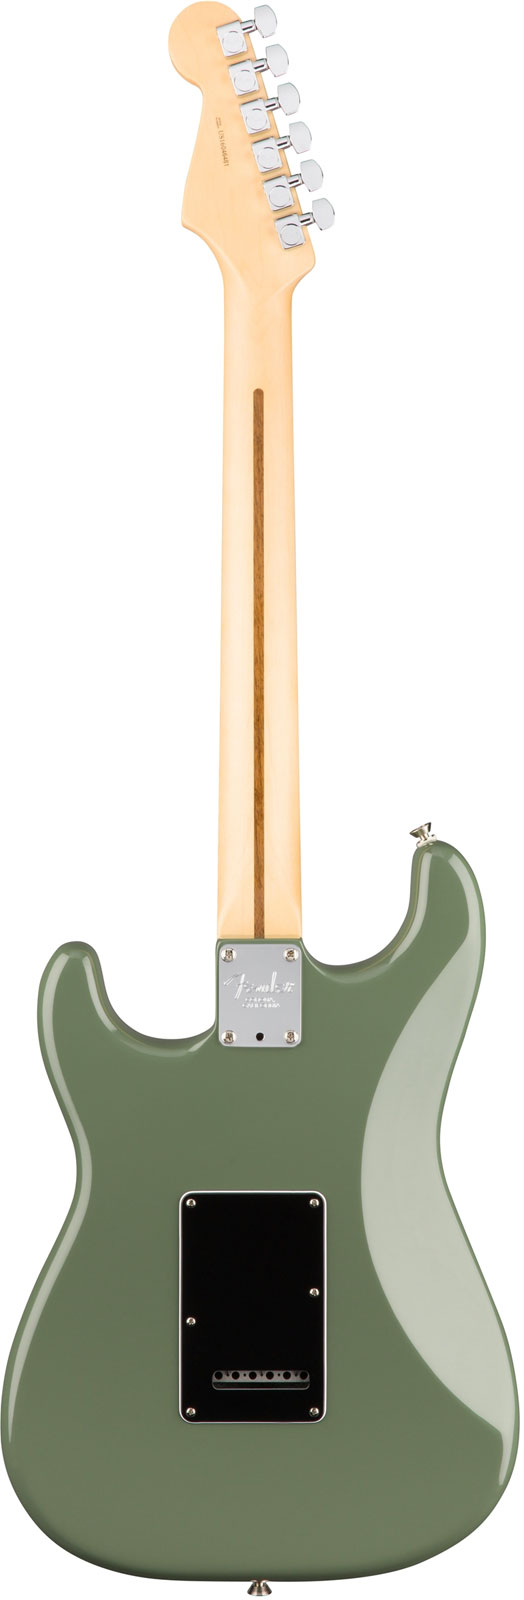 Fender Strat American Professional 2017 3s Usa Rw - Antique Olive - E-Gitarre in Str-Form - Variation 2